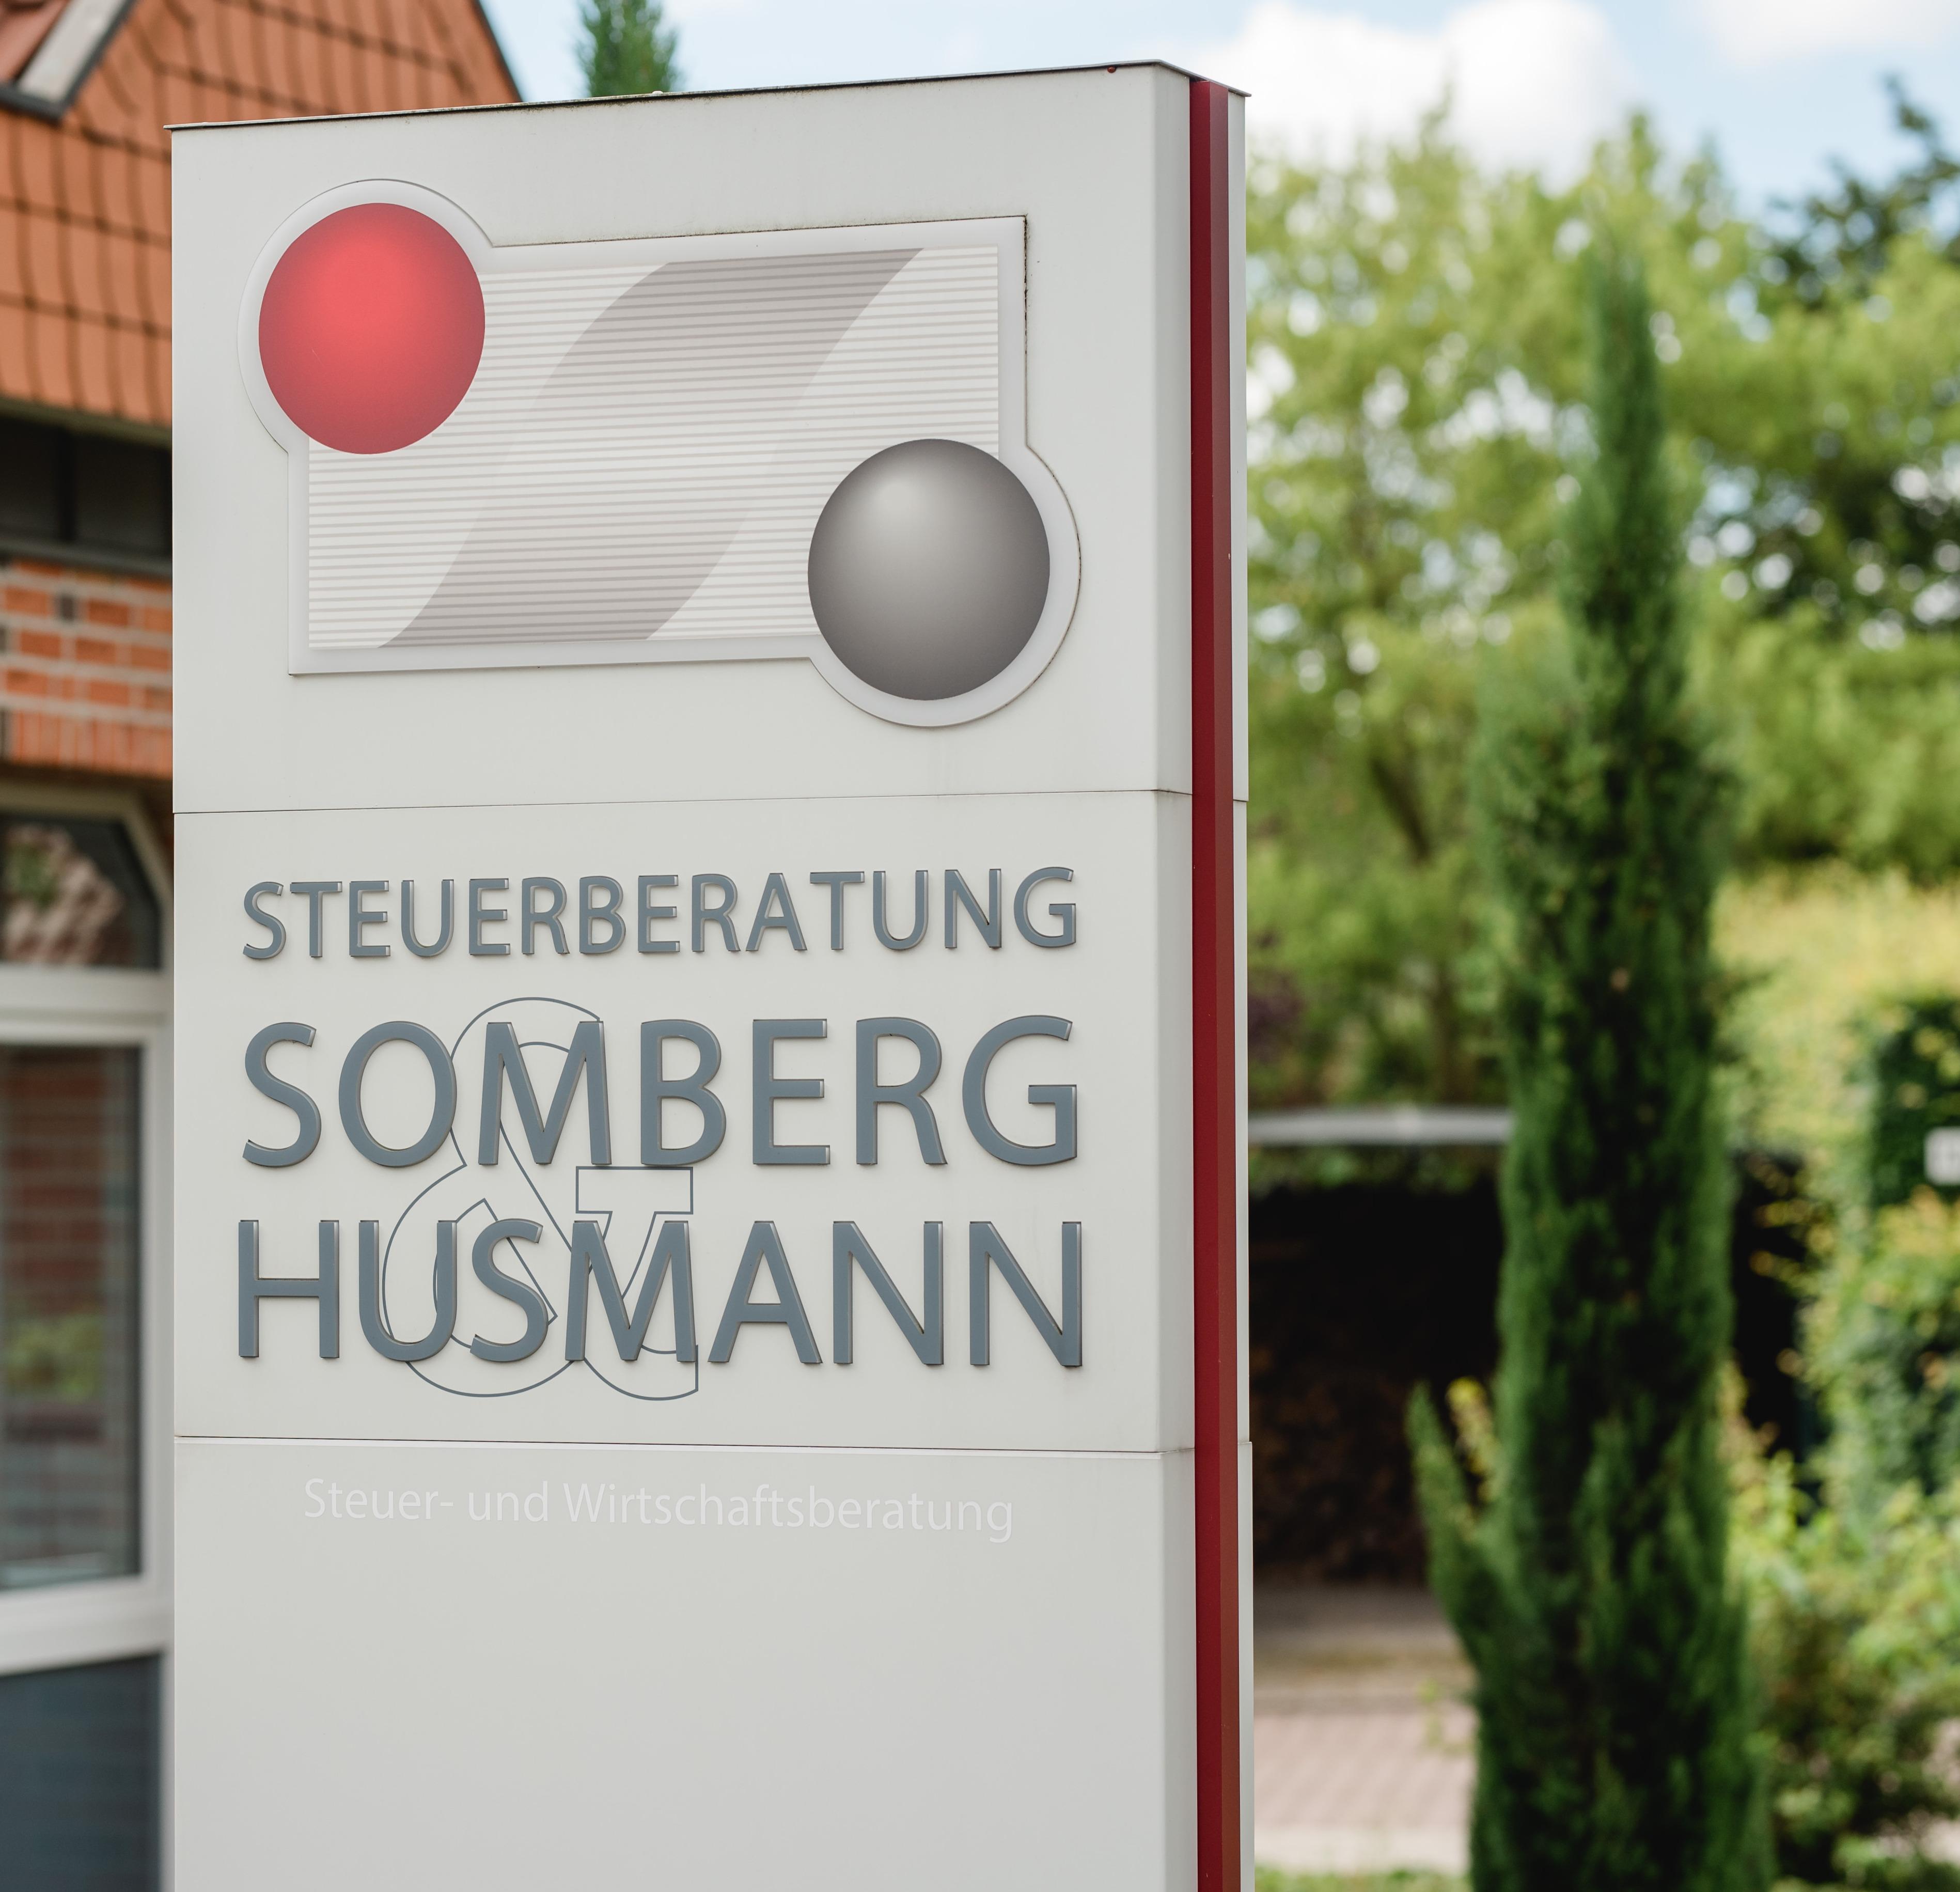 Steuerberatung Somberg & Husmann, Köpenicker Str. 1 -3 in Bad Bentheim